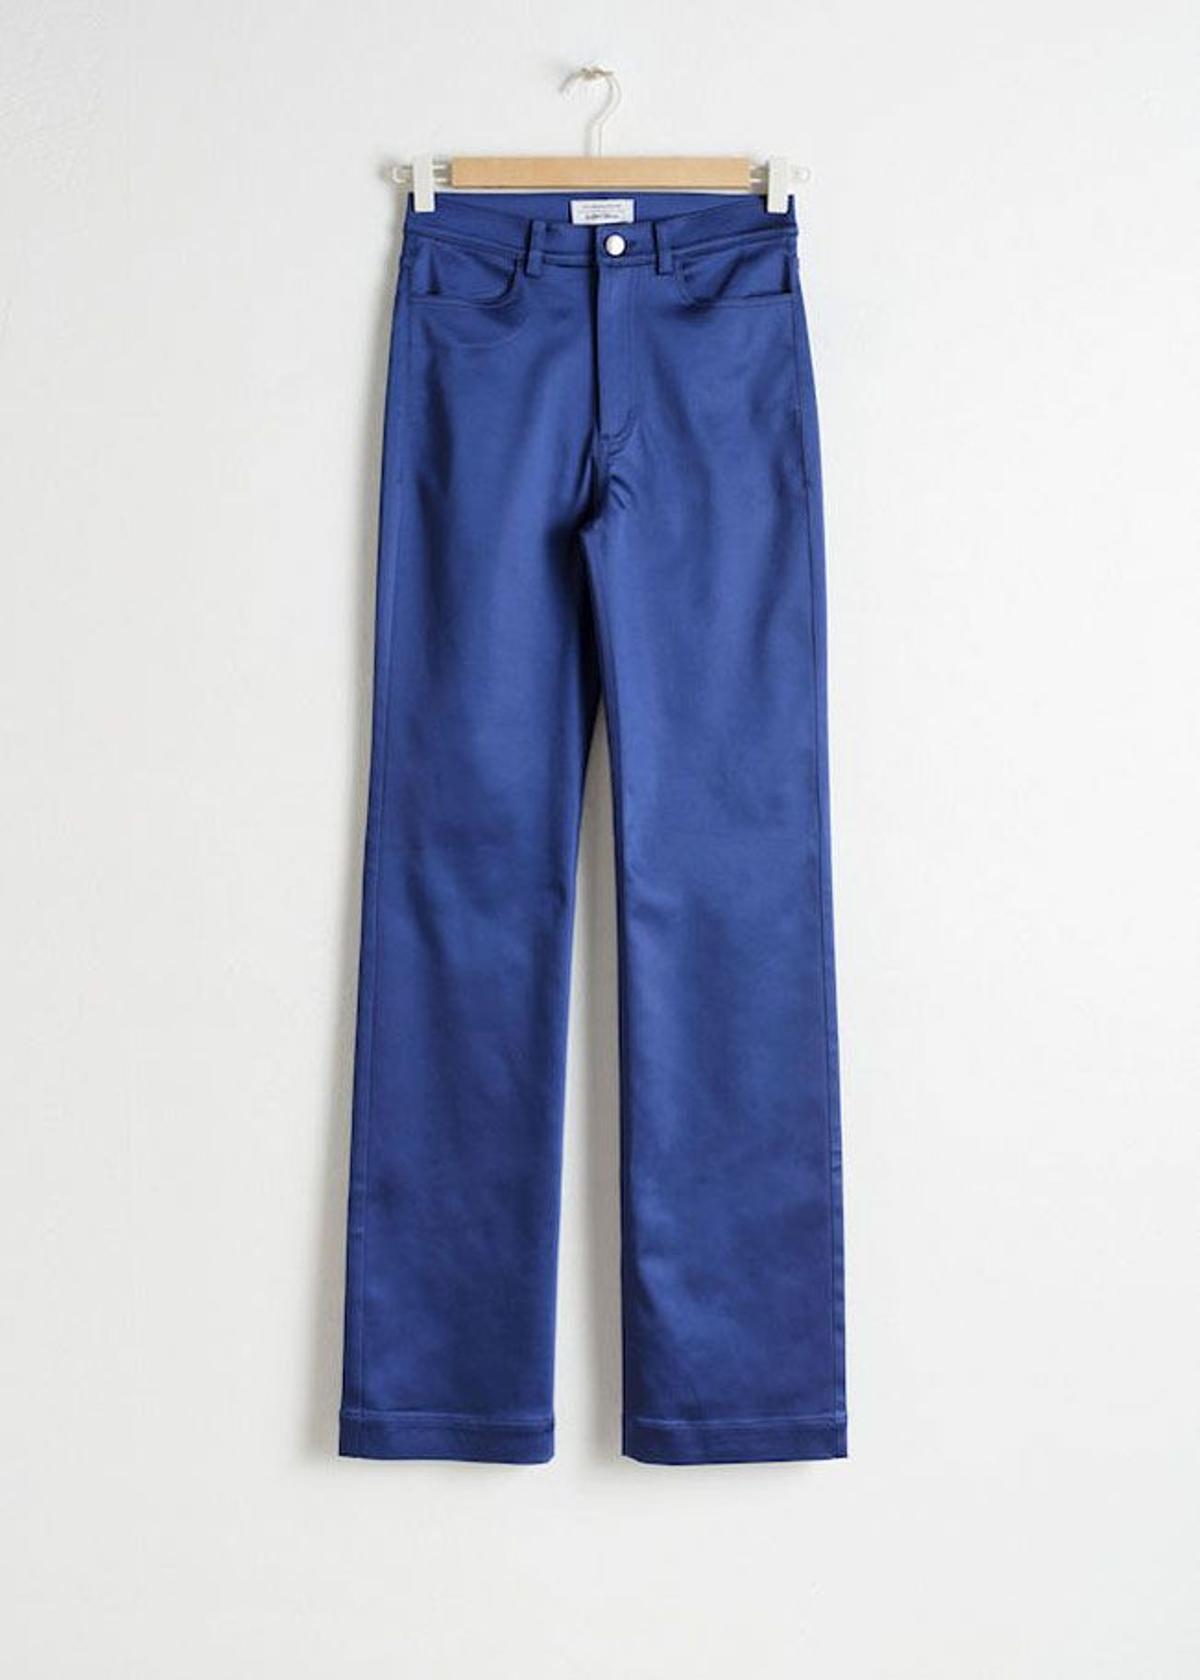 Pantalones de satén azul, de las rebajas de &amp; Other Stories